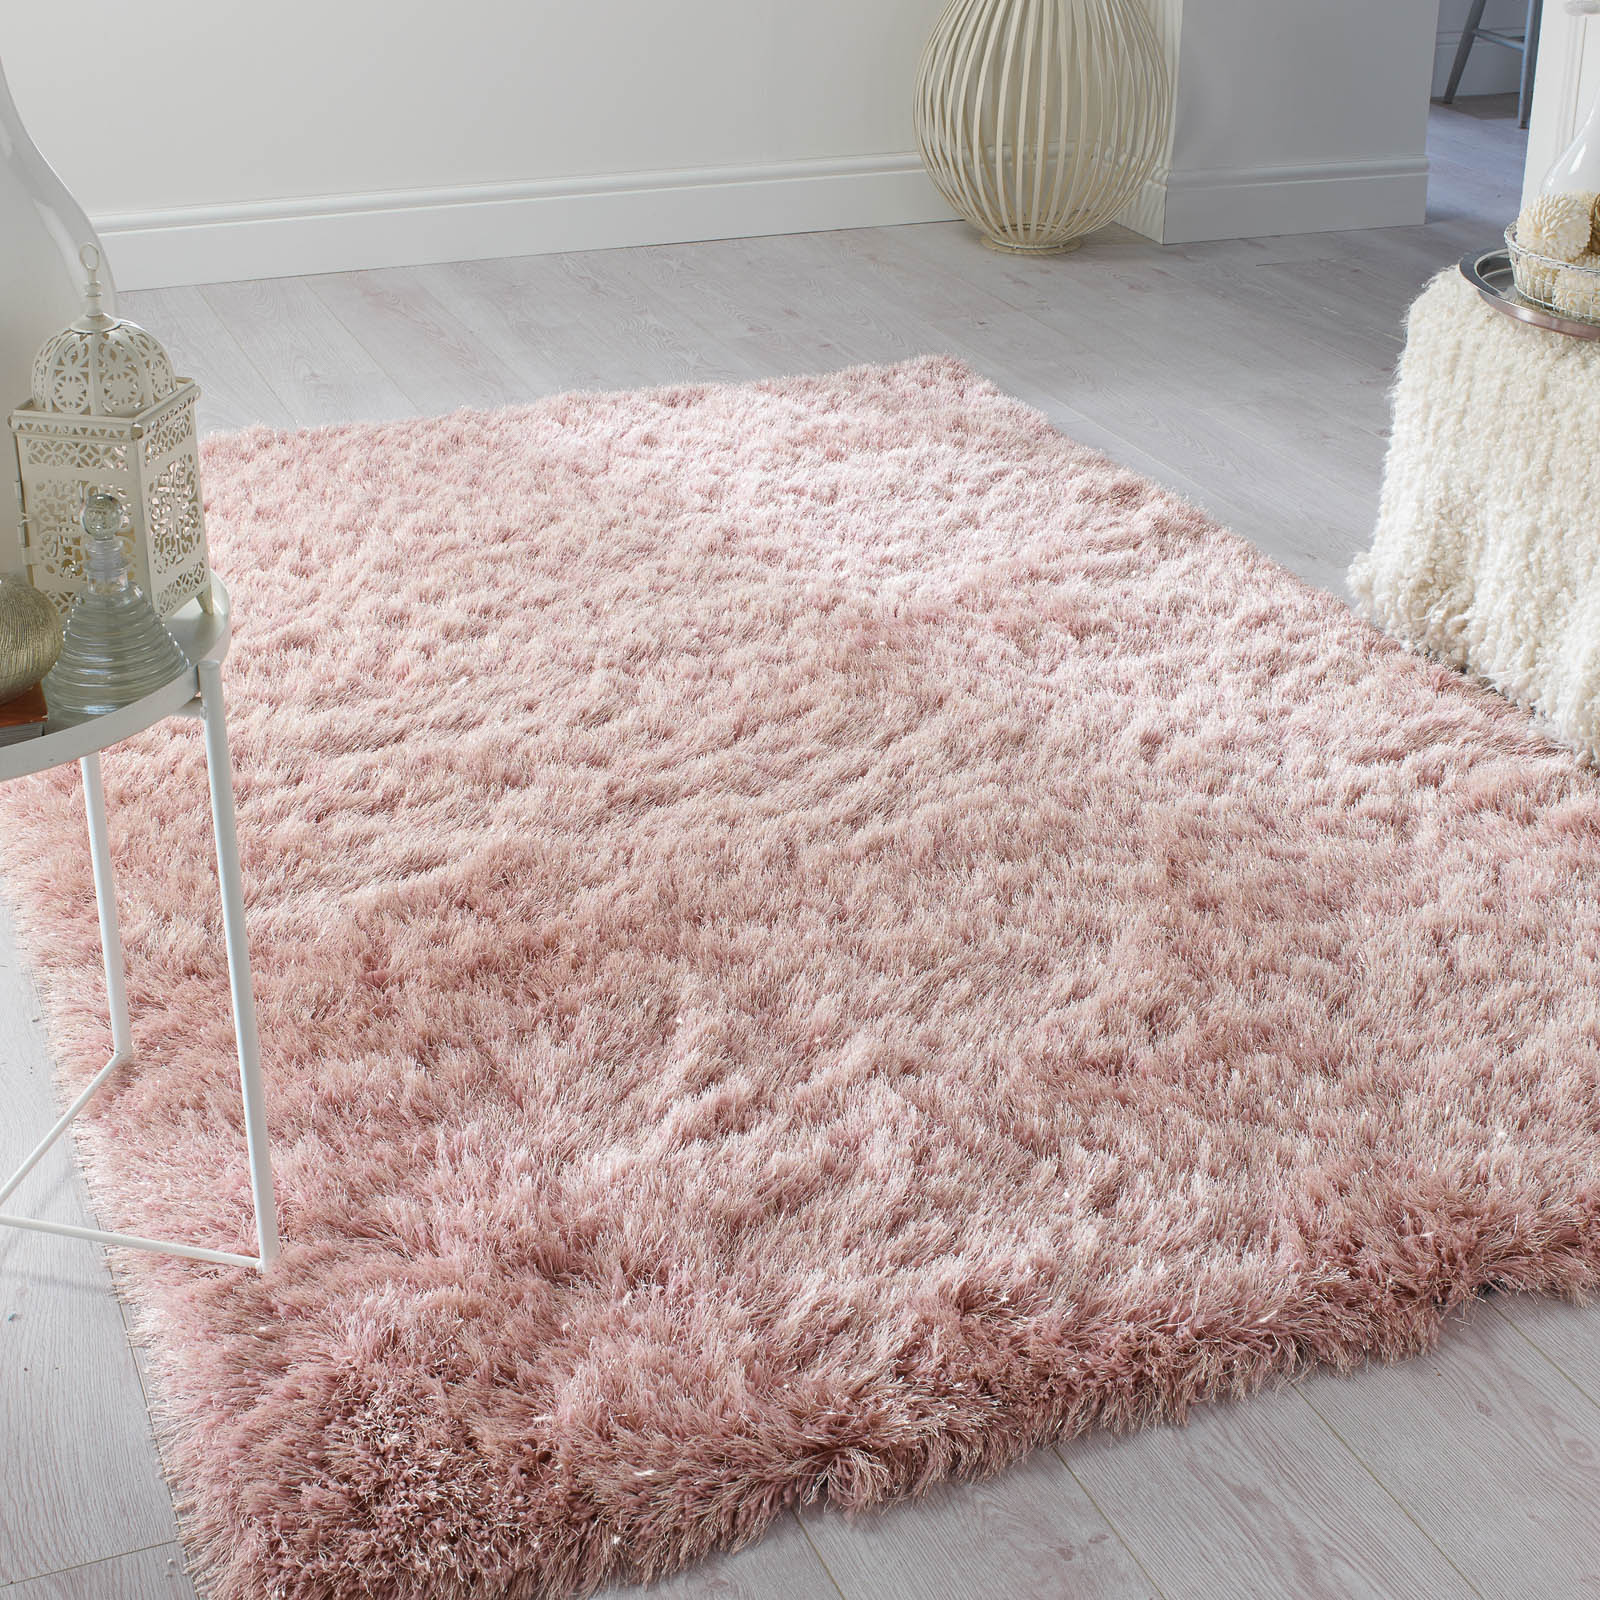 Captivating pink rug